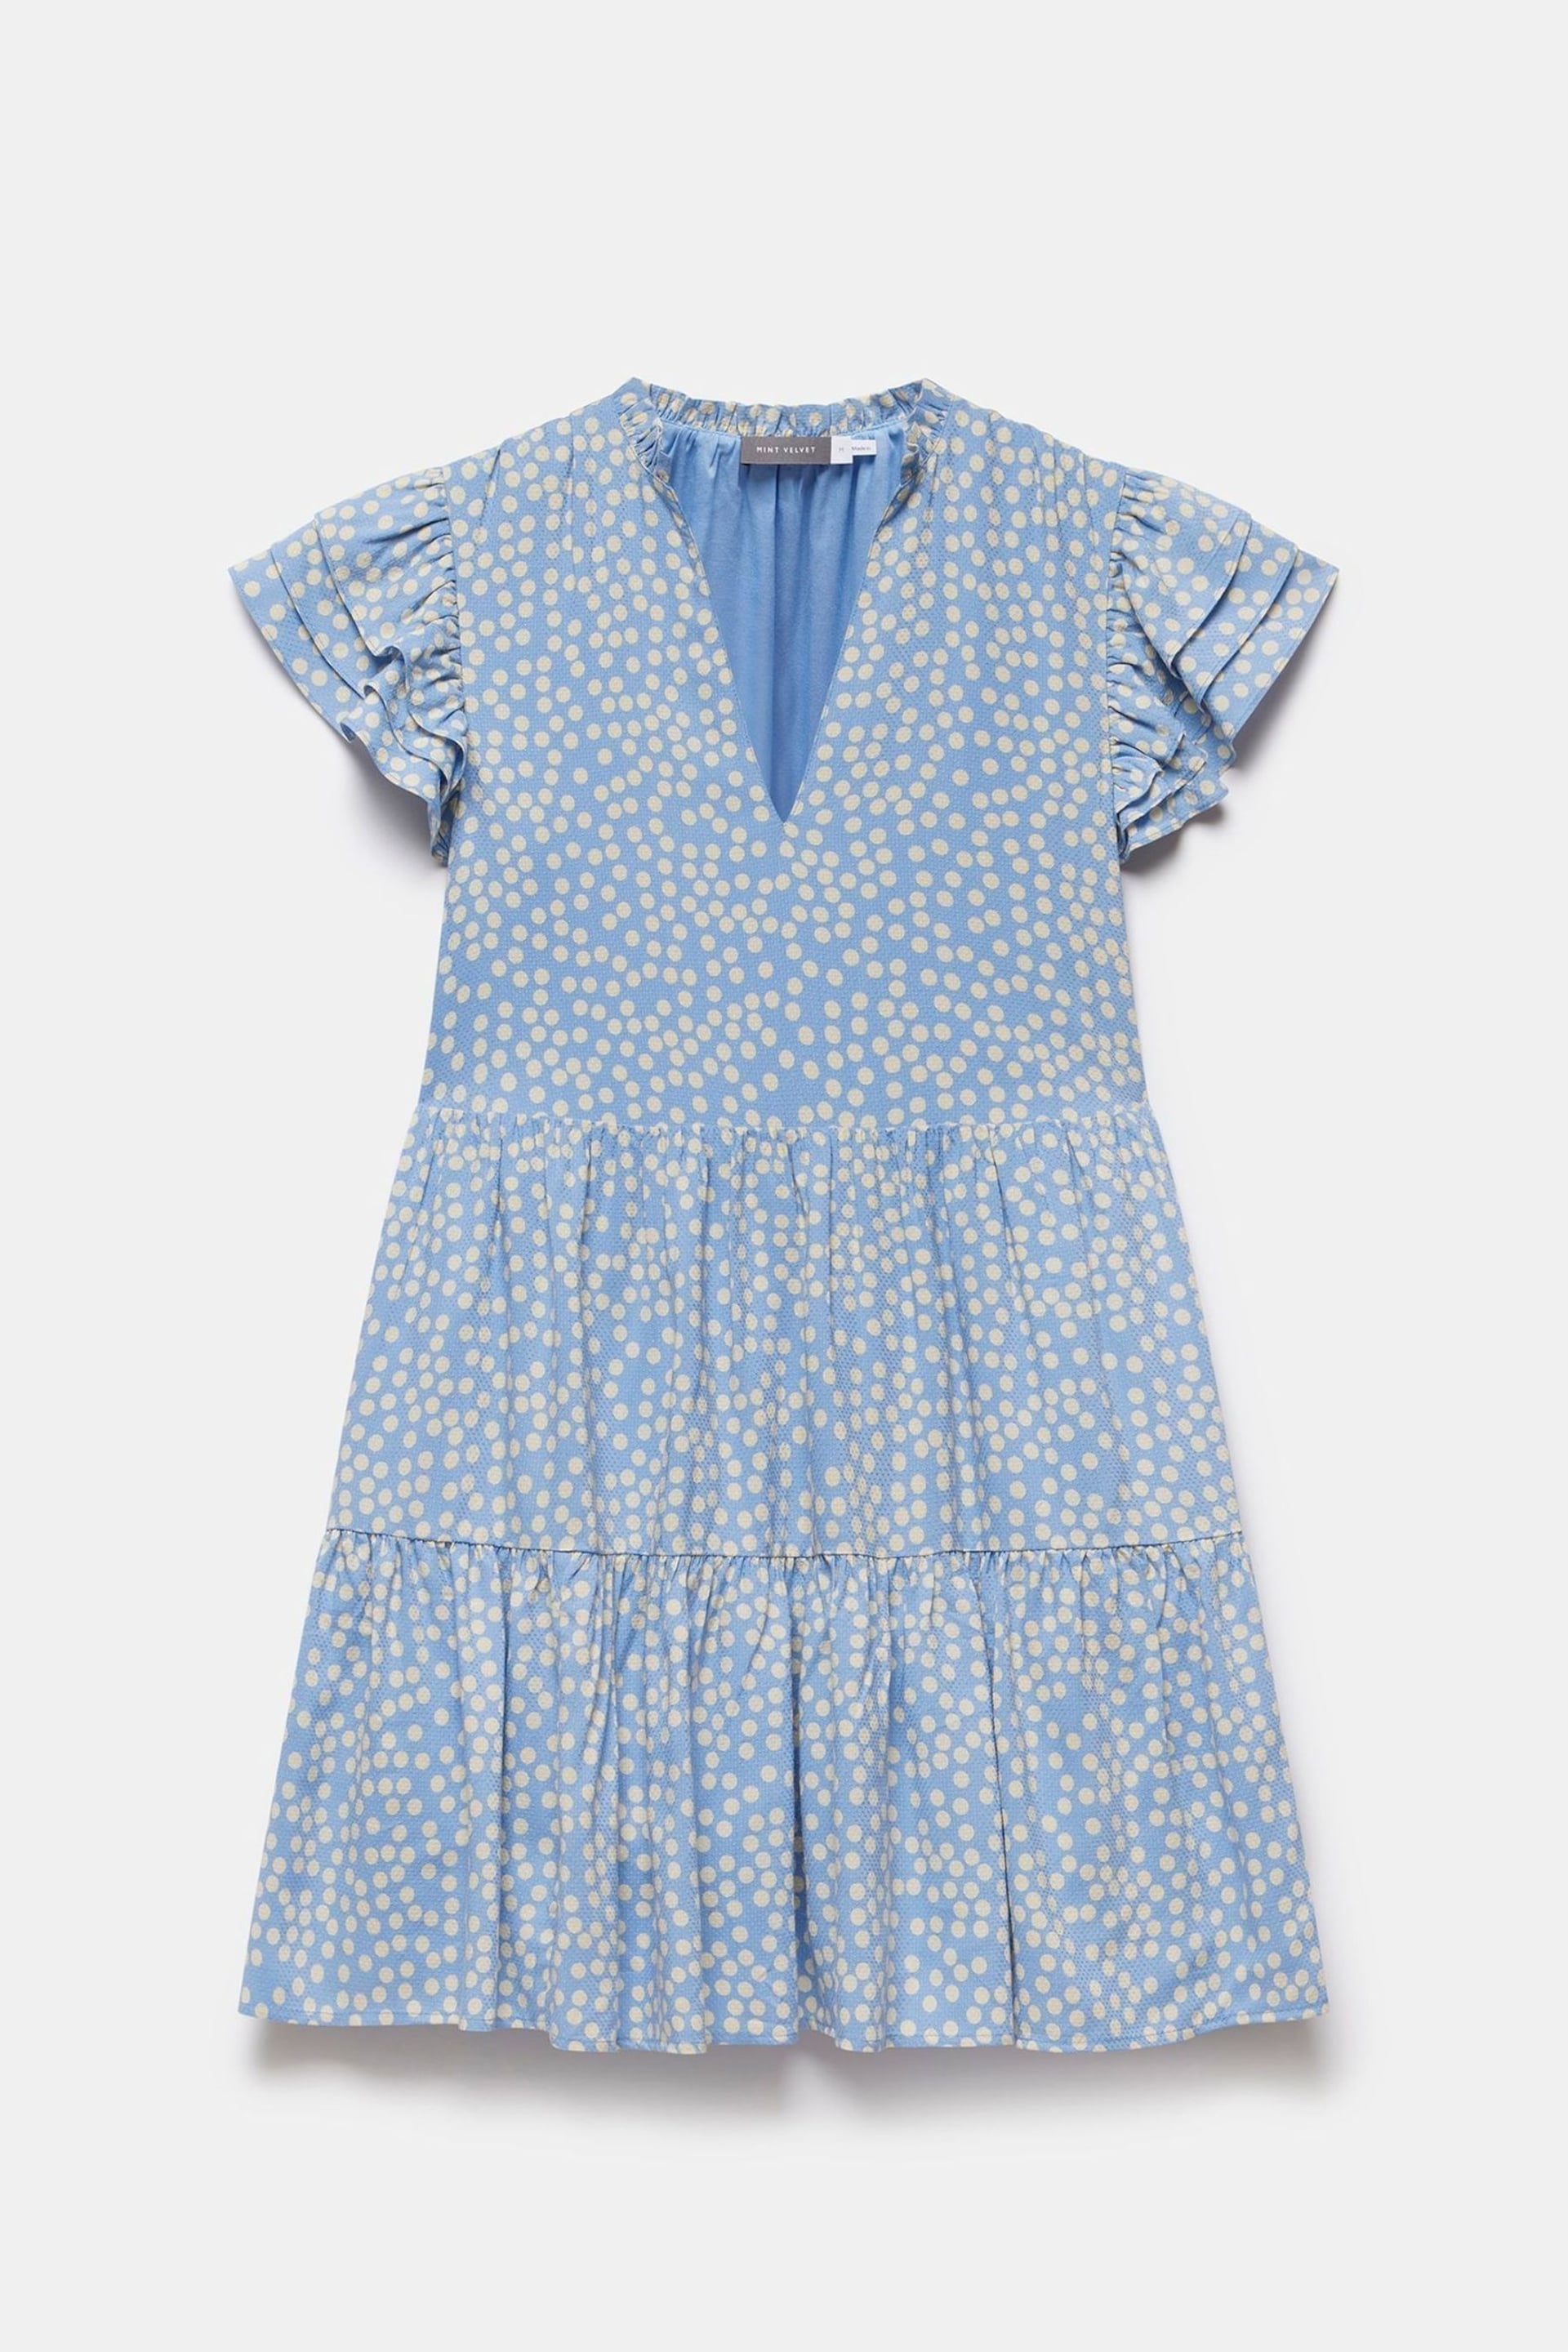 Mint Velvet Blue Spot Print Tiered Mini Dress - Image 5 of 6